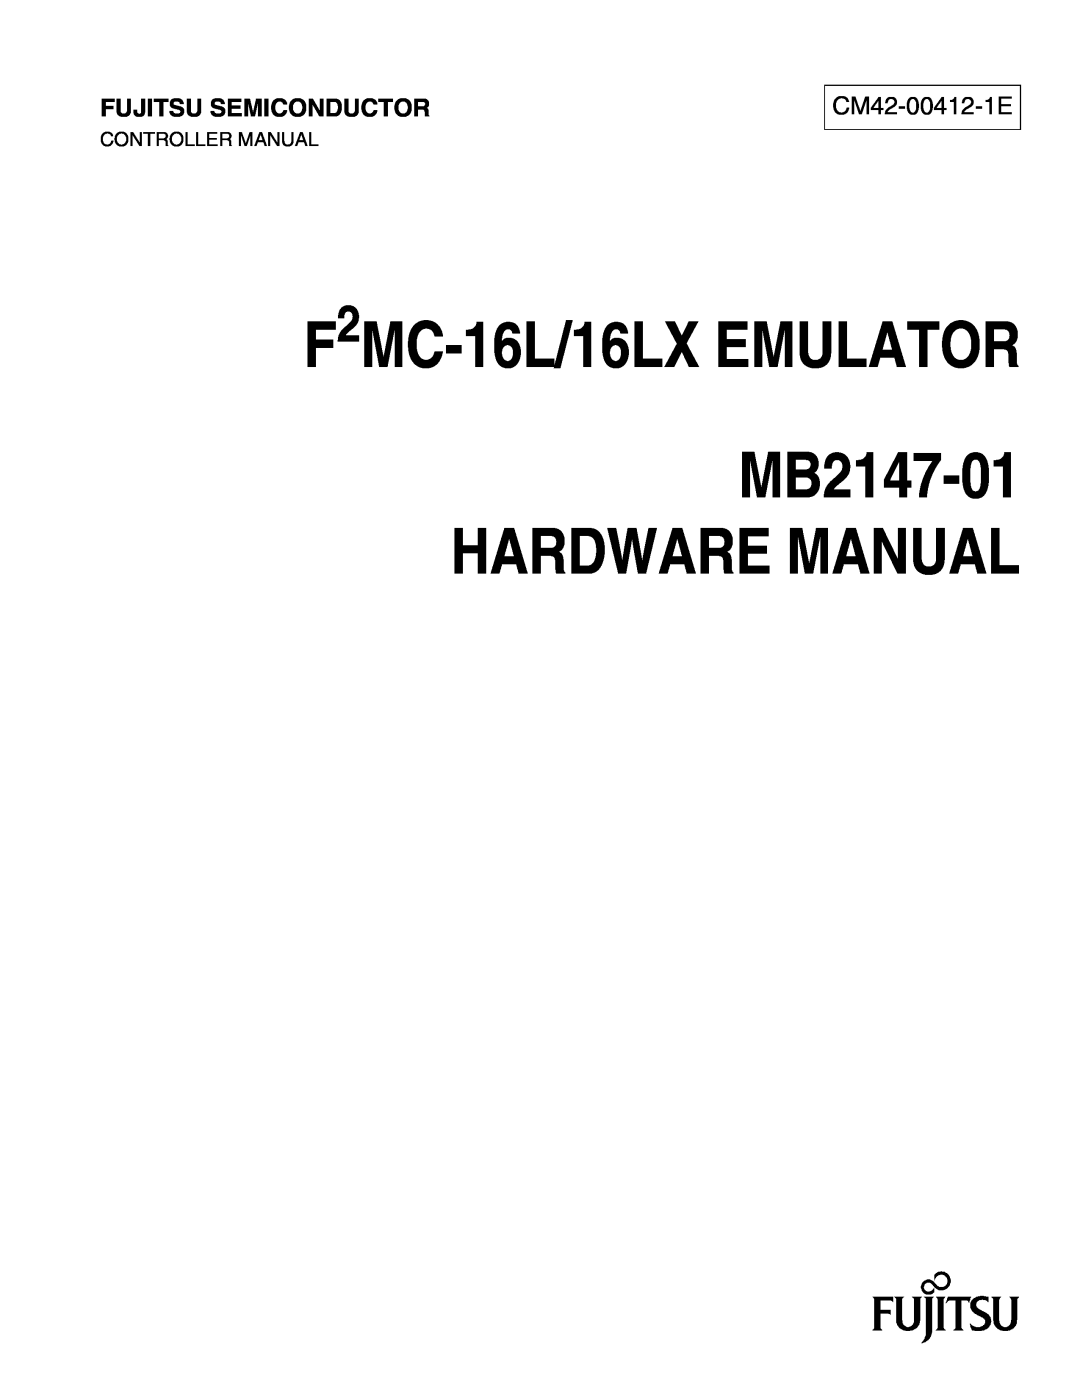 Fujitsu MB2147-01 manual Hardware Manual, F2MC-16L/16LX EMULATOR, Fujitsu Semiconductor, CM42-00412-1E, Controller Manual 